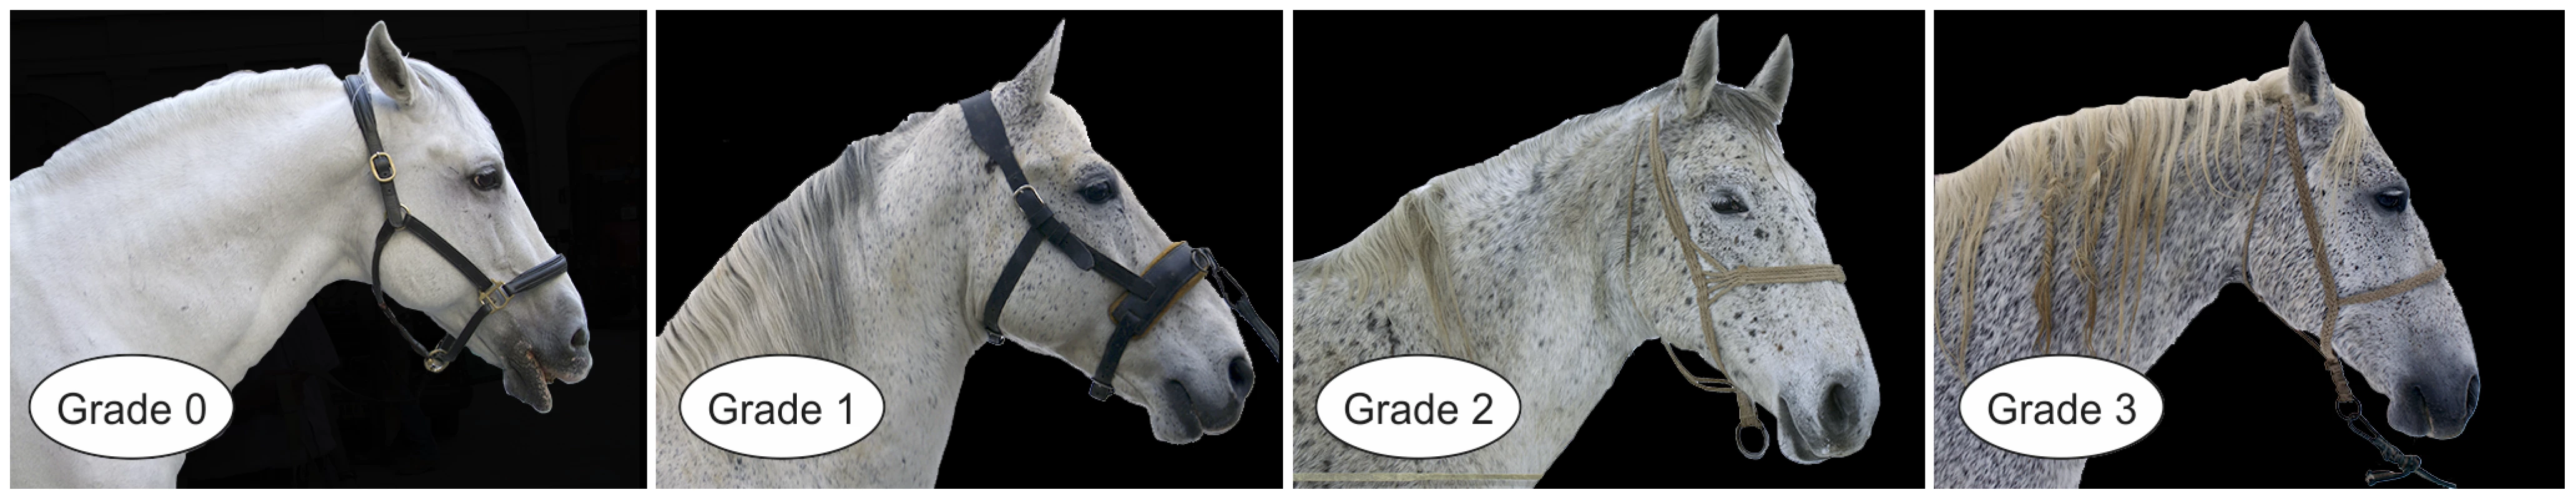 Variation of speckling grade in four grey Lipizzan horses.